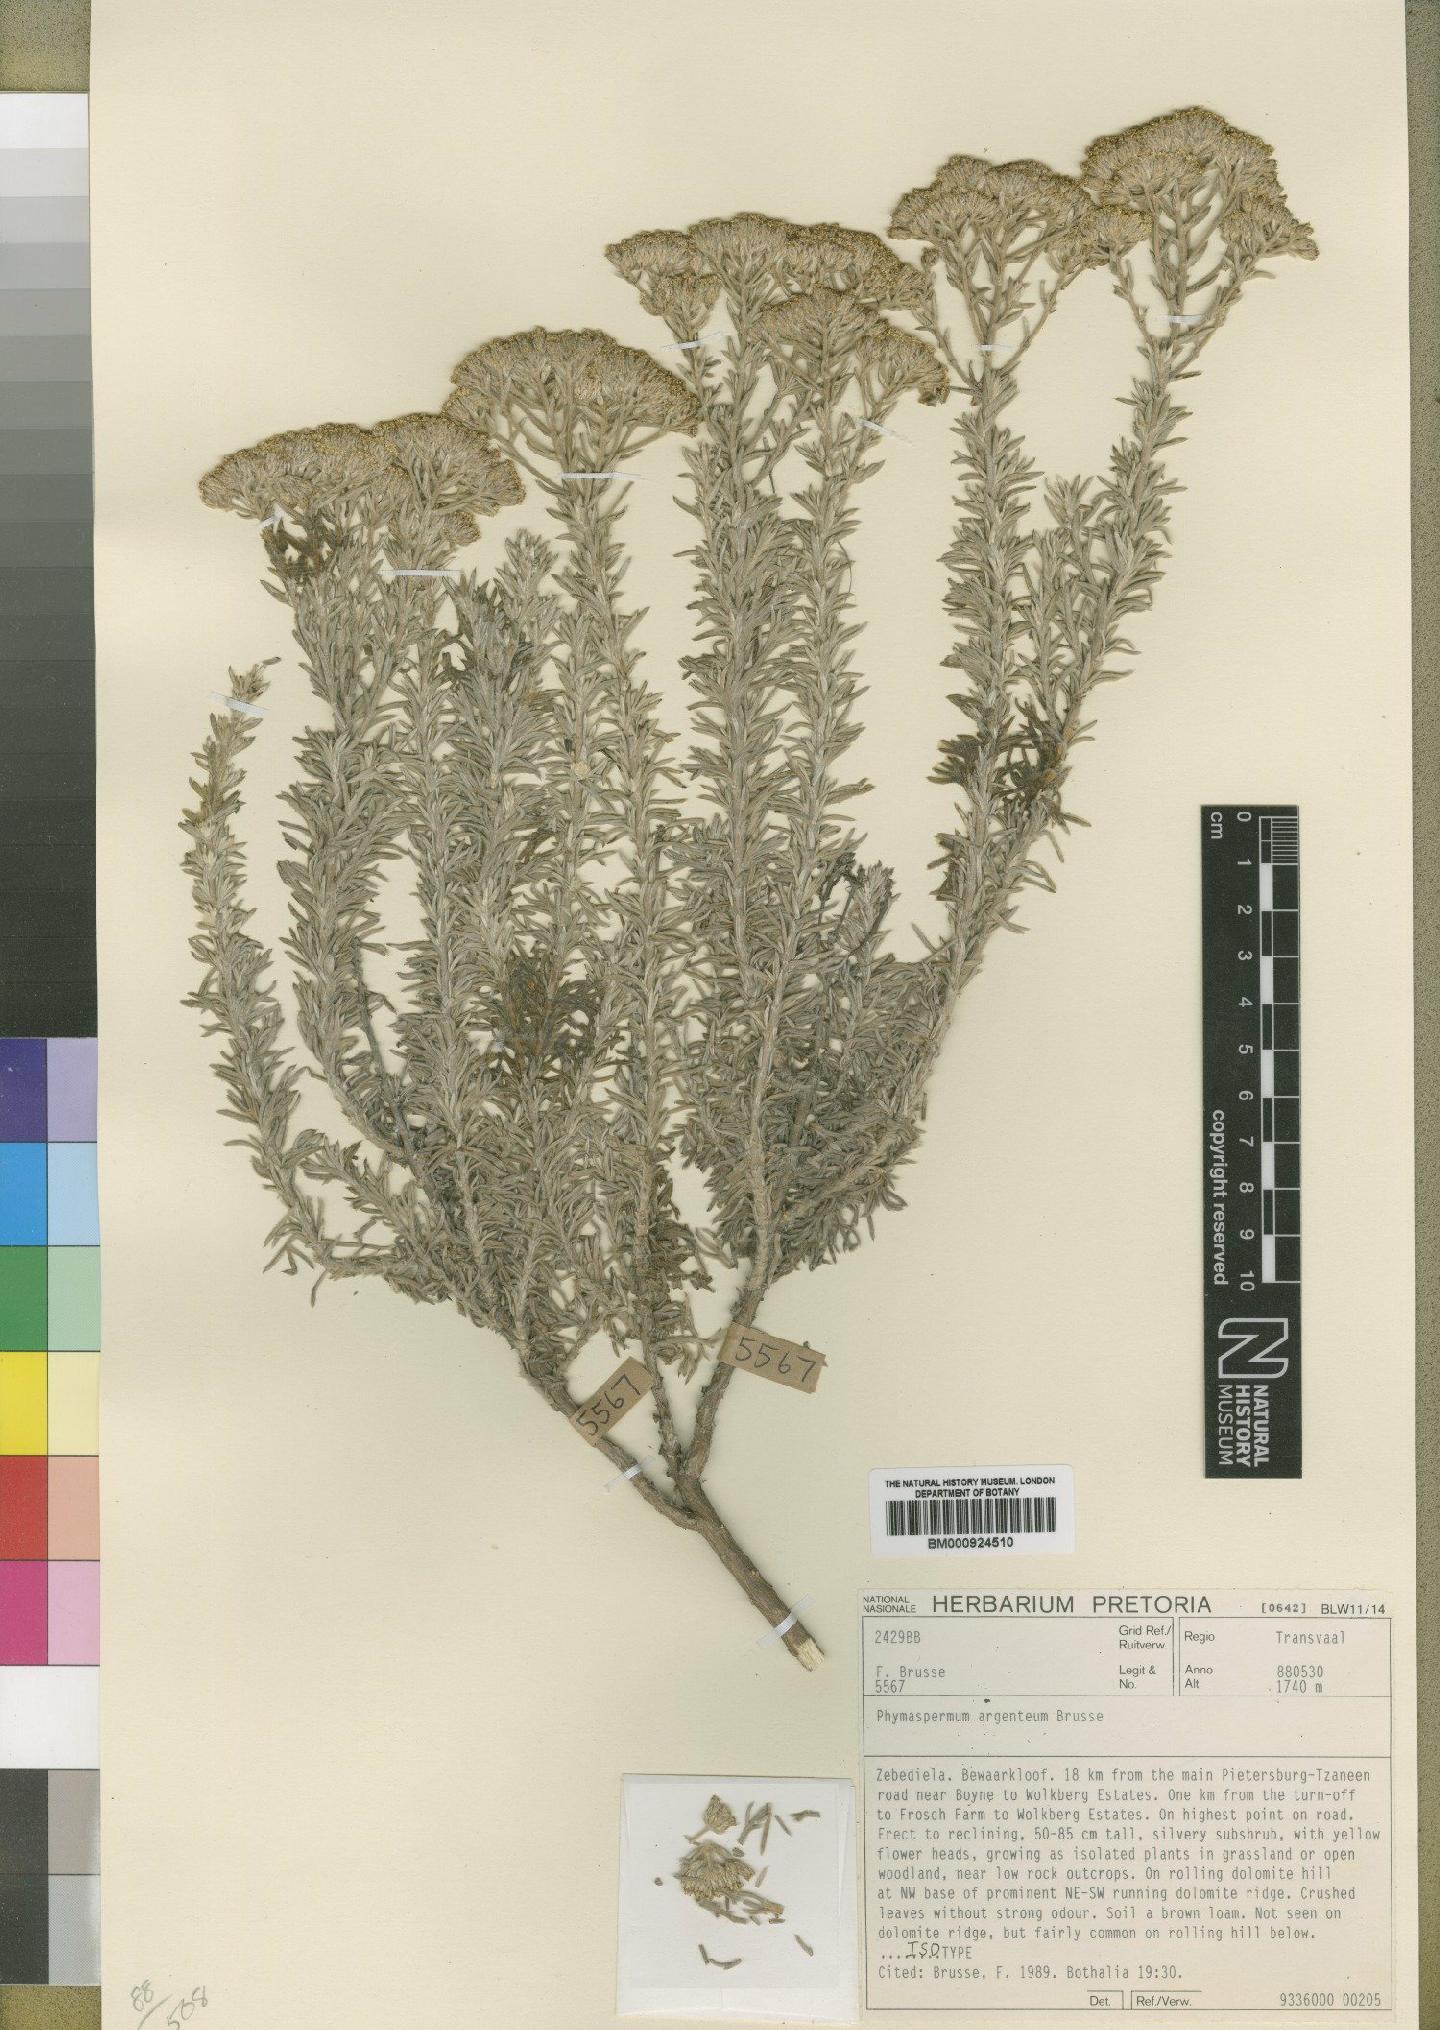 To NHMUK collection (Phymaspermum argenteum Brusse; Isotype; NHMUK:ecatalogue:4529524)